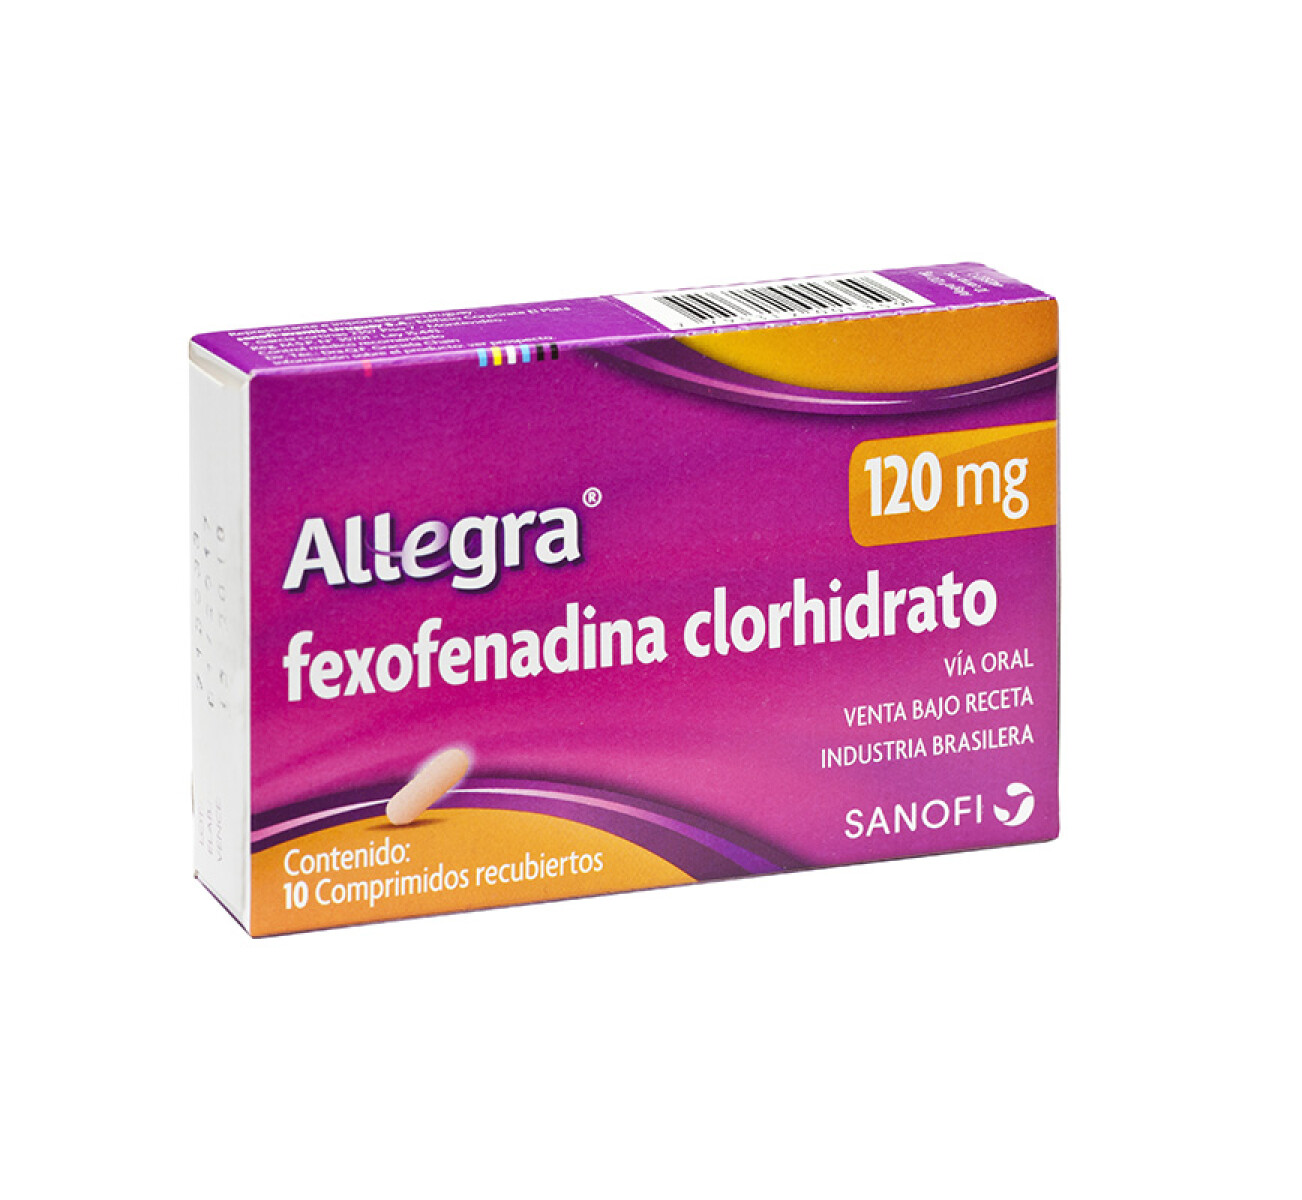 Allegra antialérgico - 120 mg 